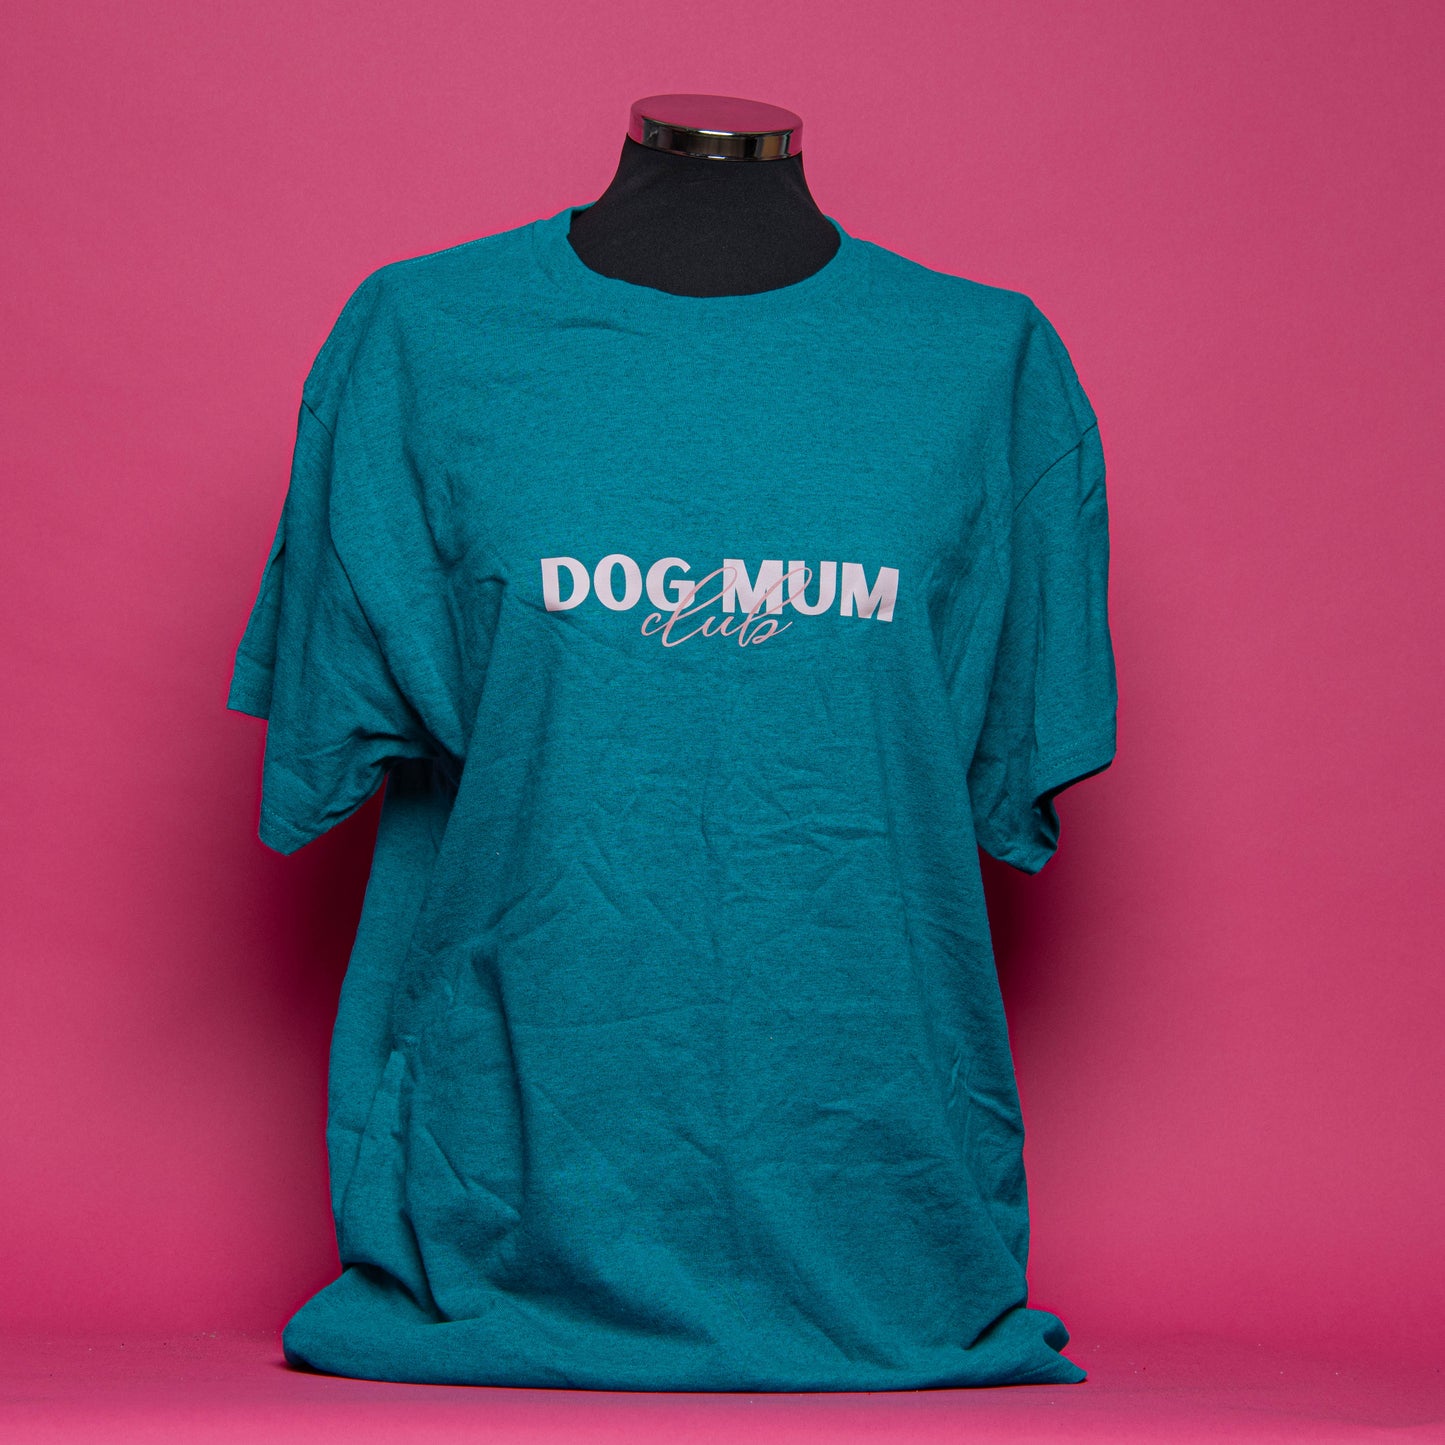 END OF LINE Jade Dog Mum Club T-Shirt Size Large